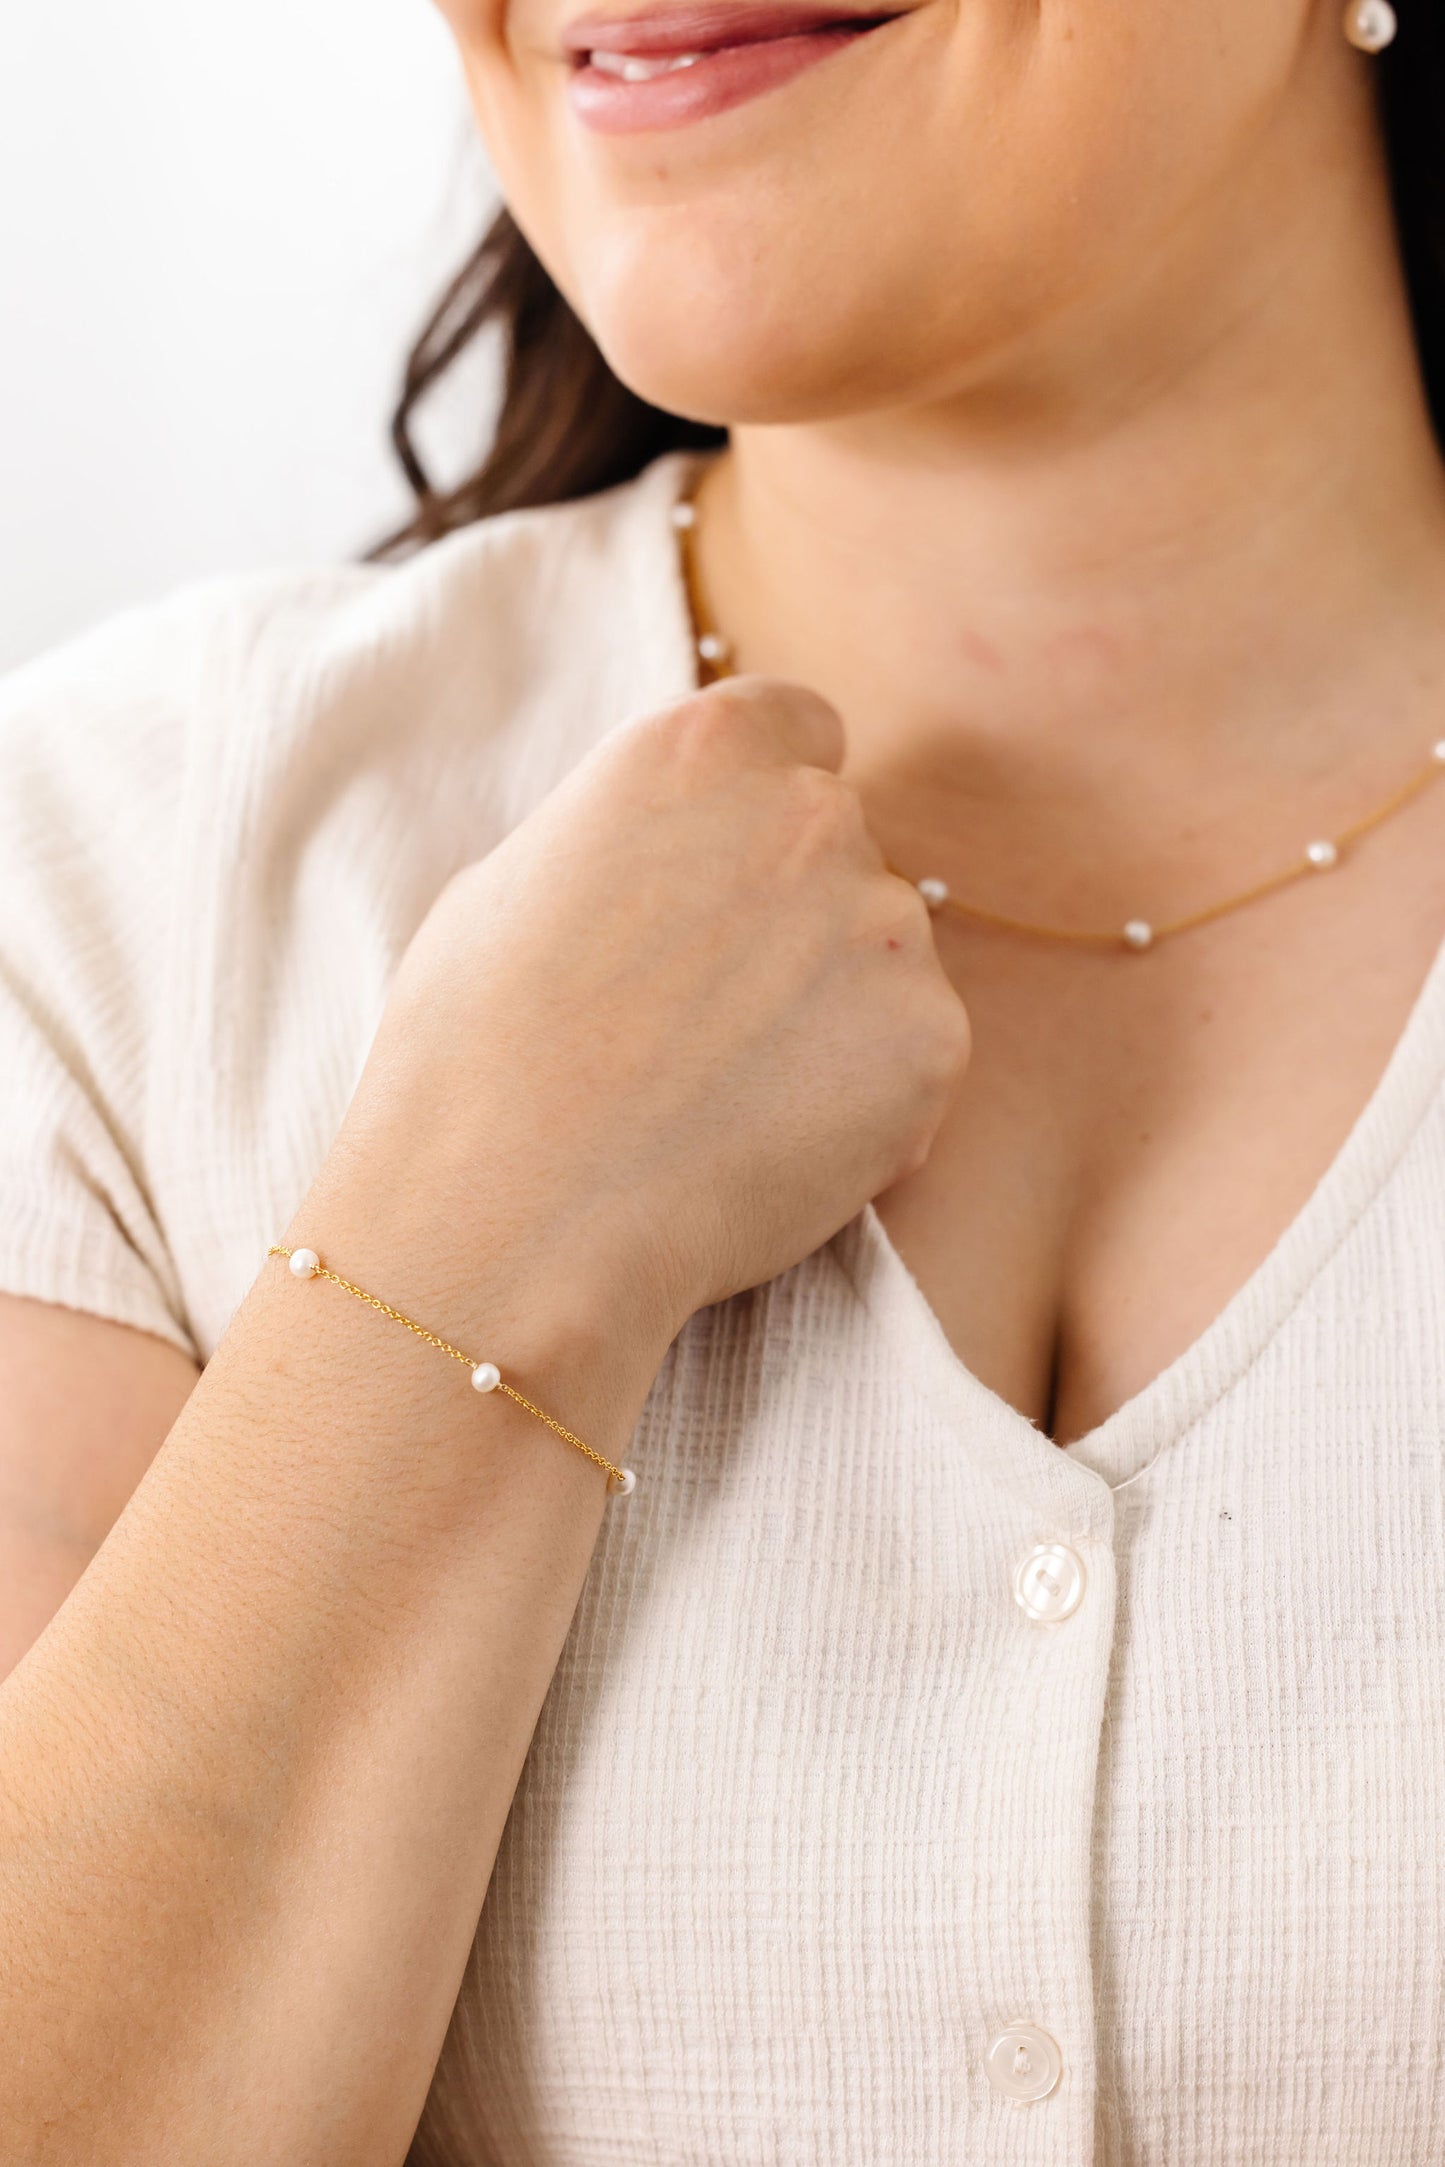 Floating Pearl Necklace + Adult Bracelet (4MM Beads)